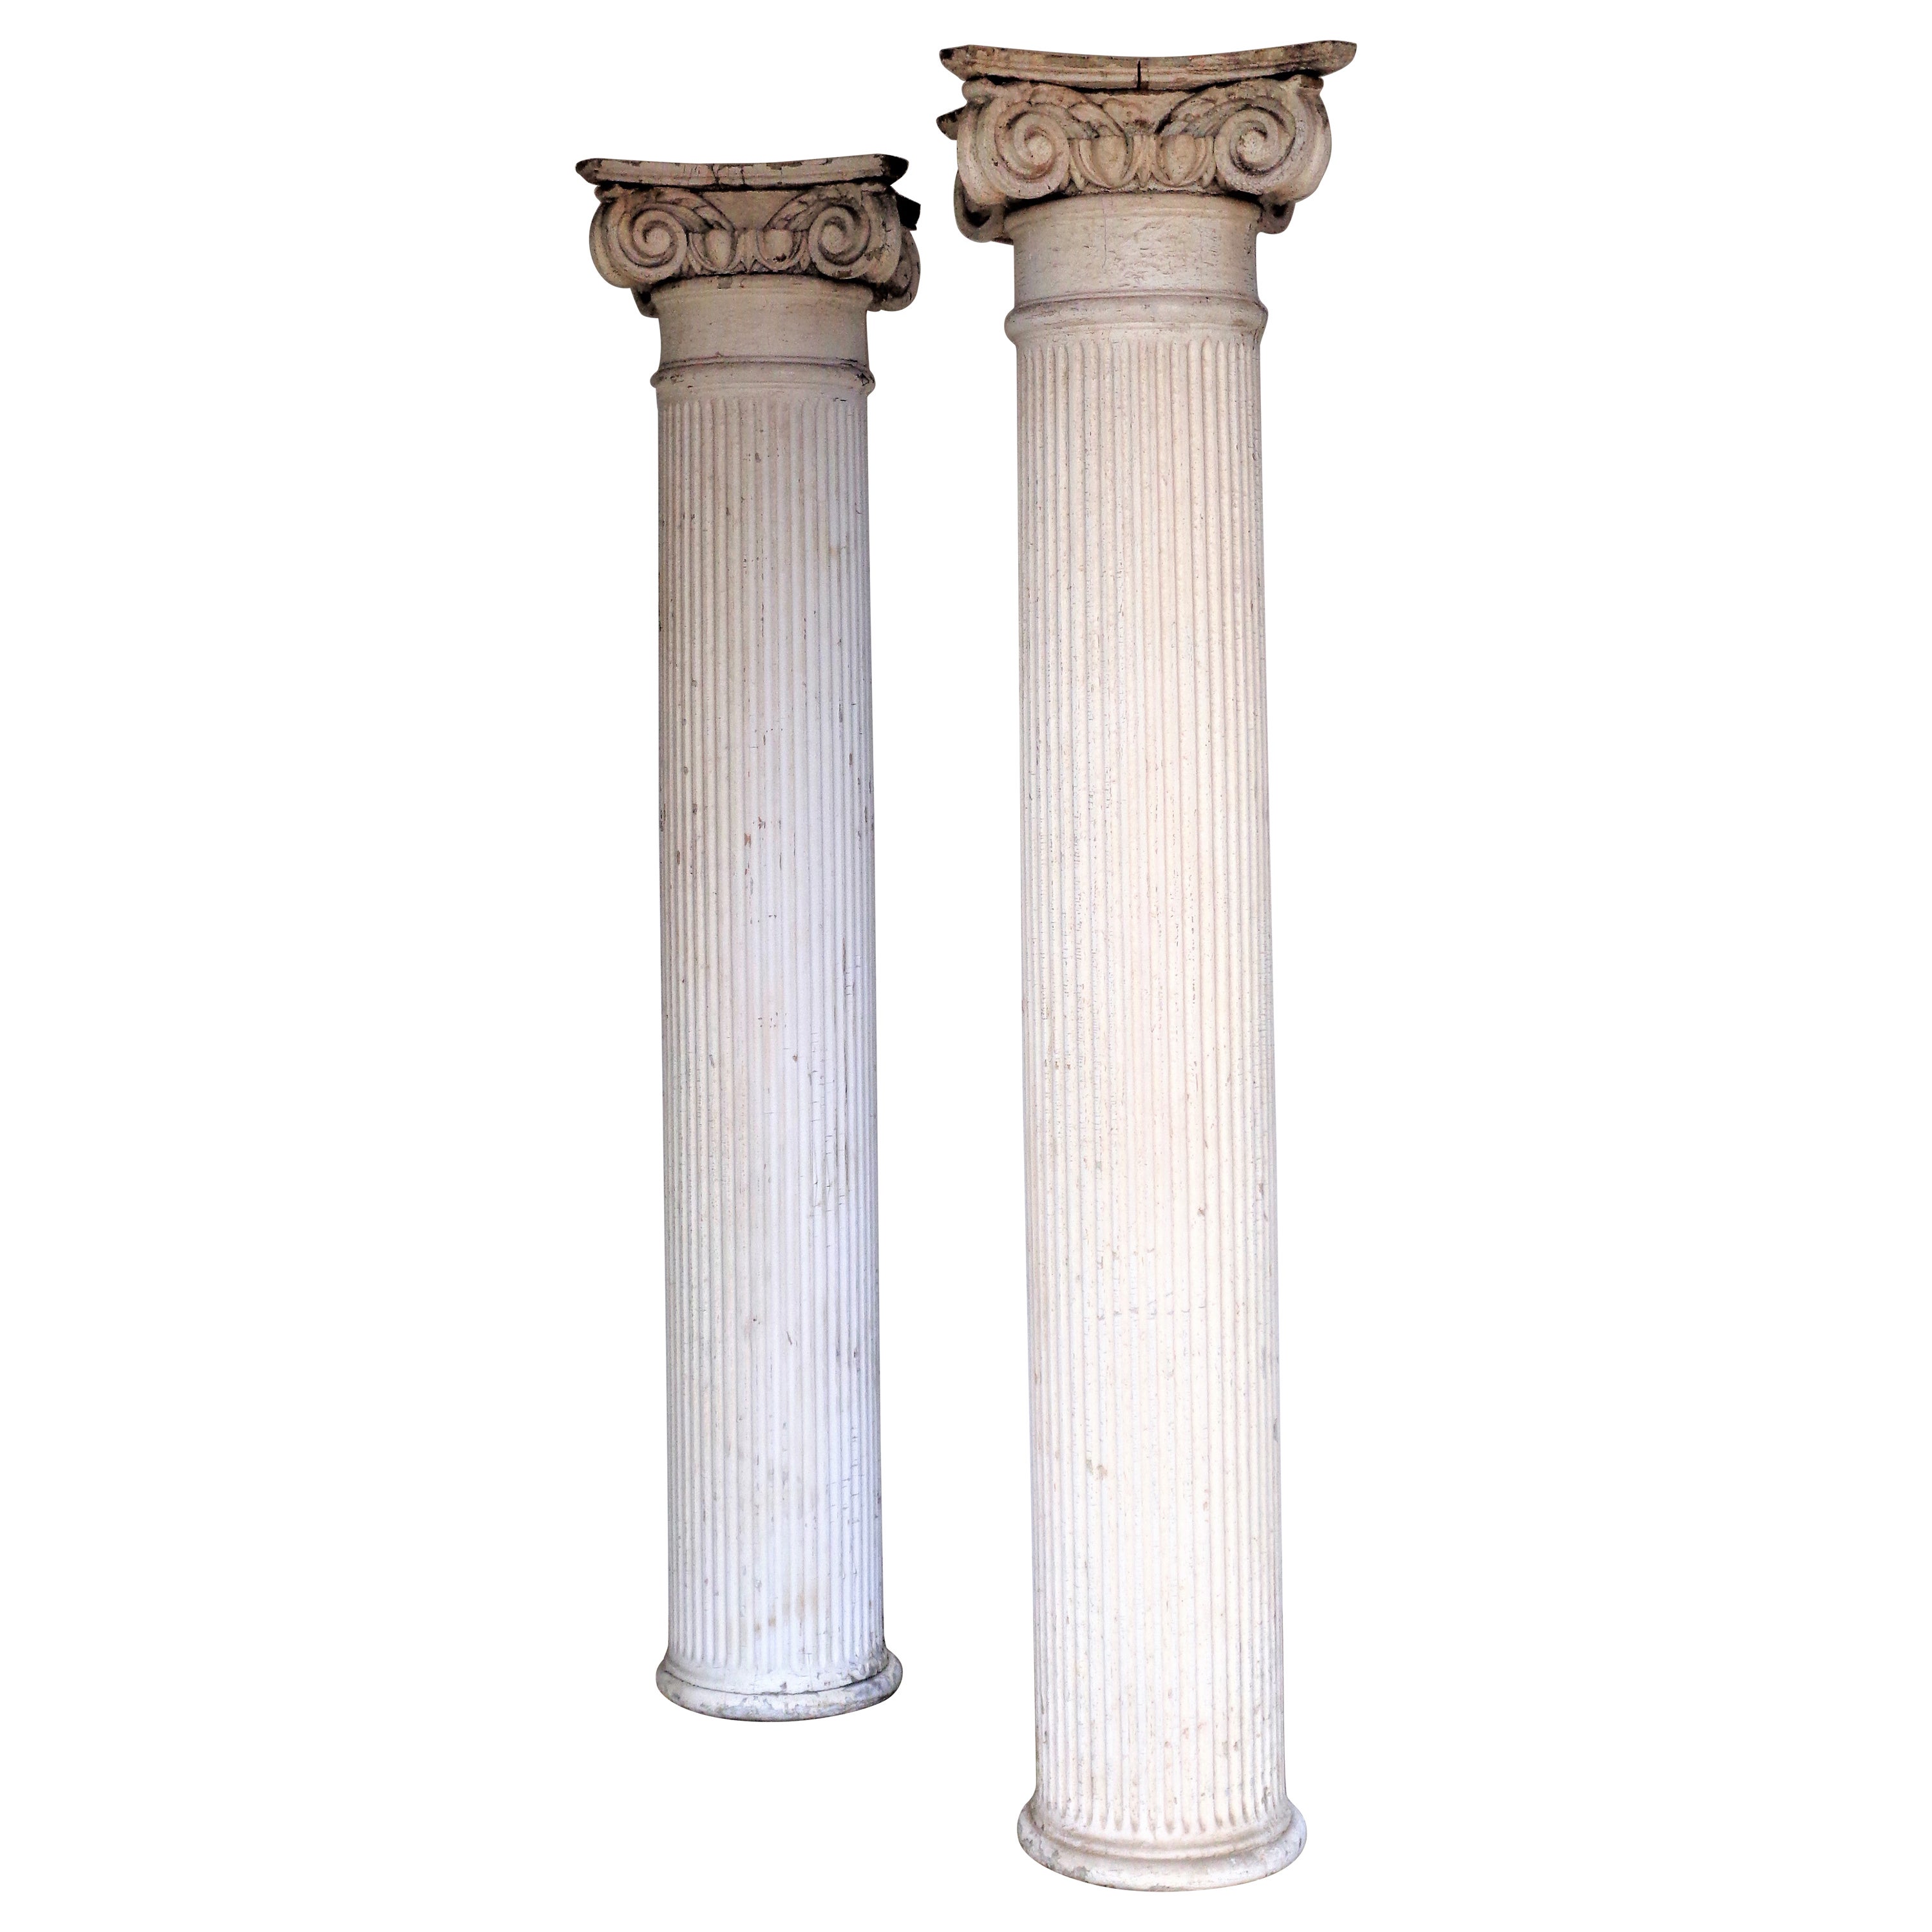 19th Century American Architectural Ionic Columns